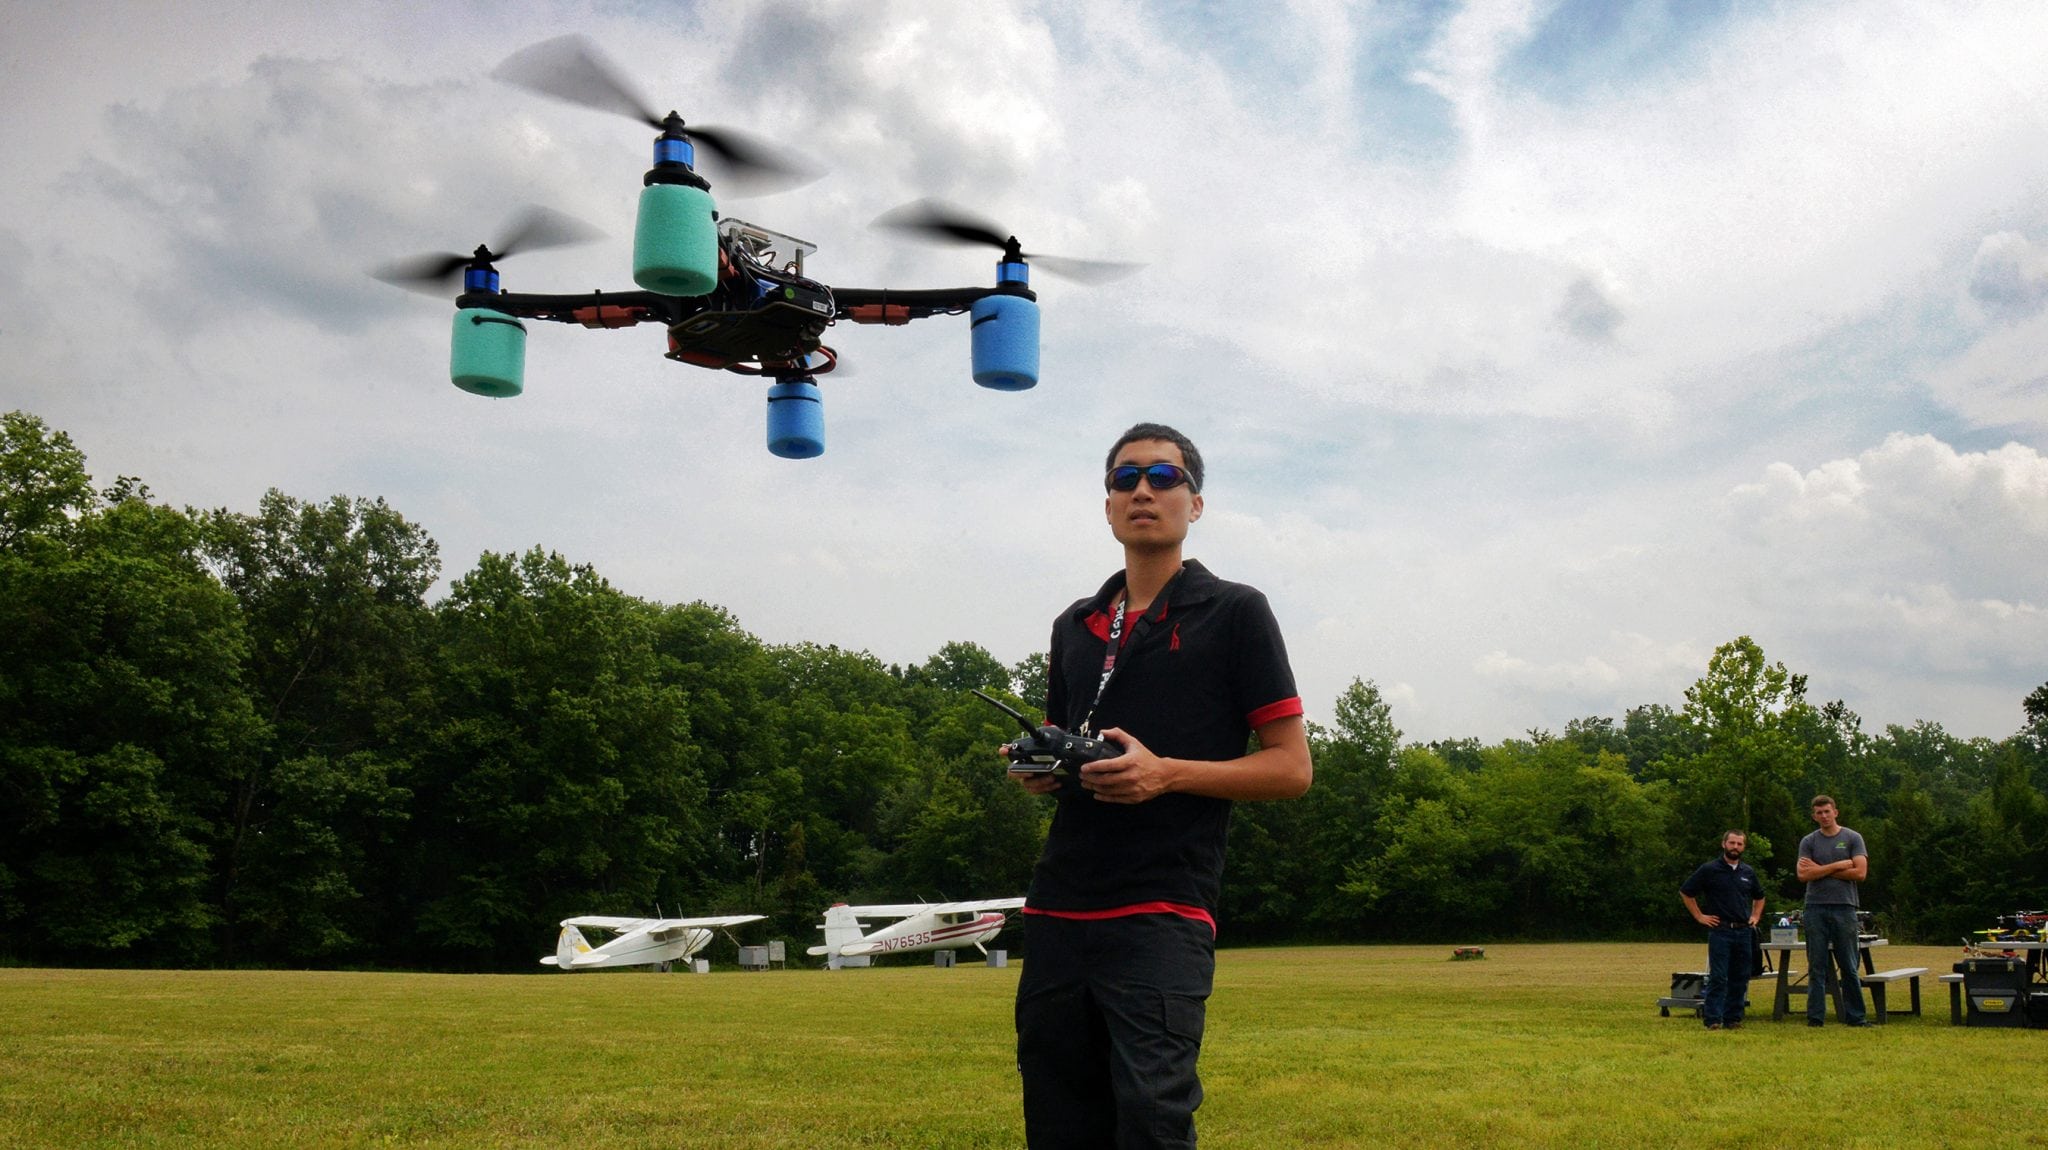 Photo: Recreational drone